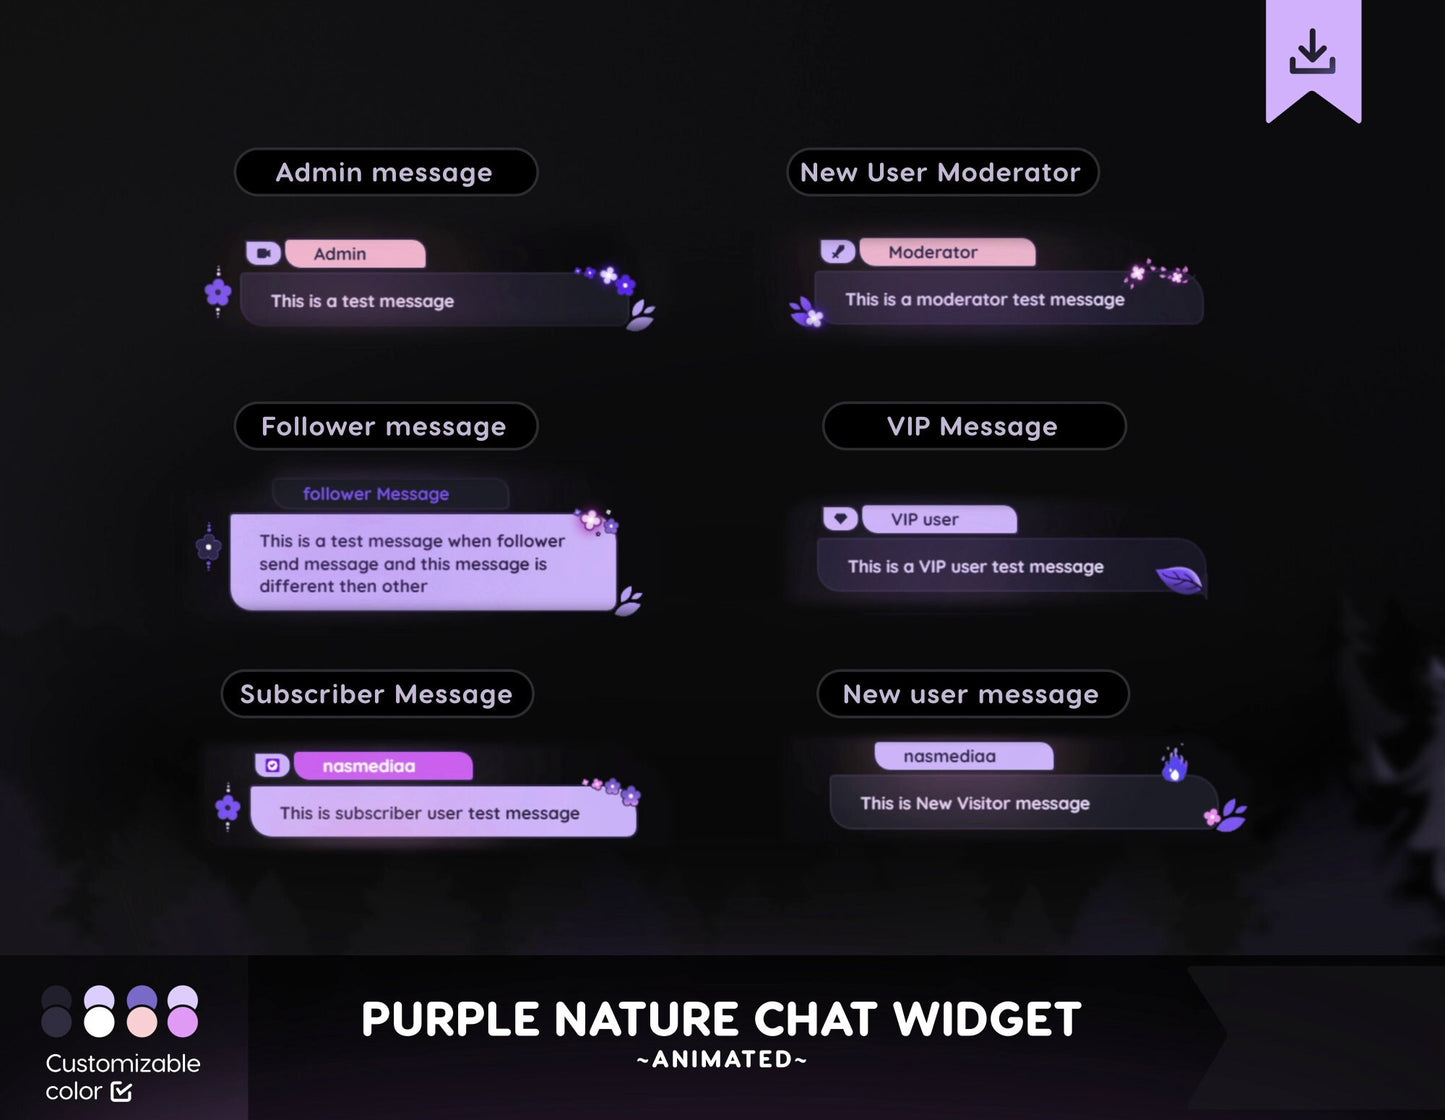 Autumn Twitch chat widget (with custom colour) + goal widget